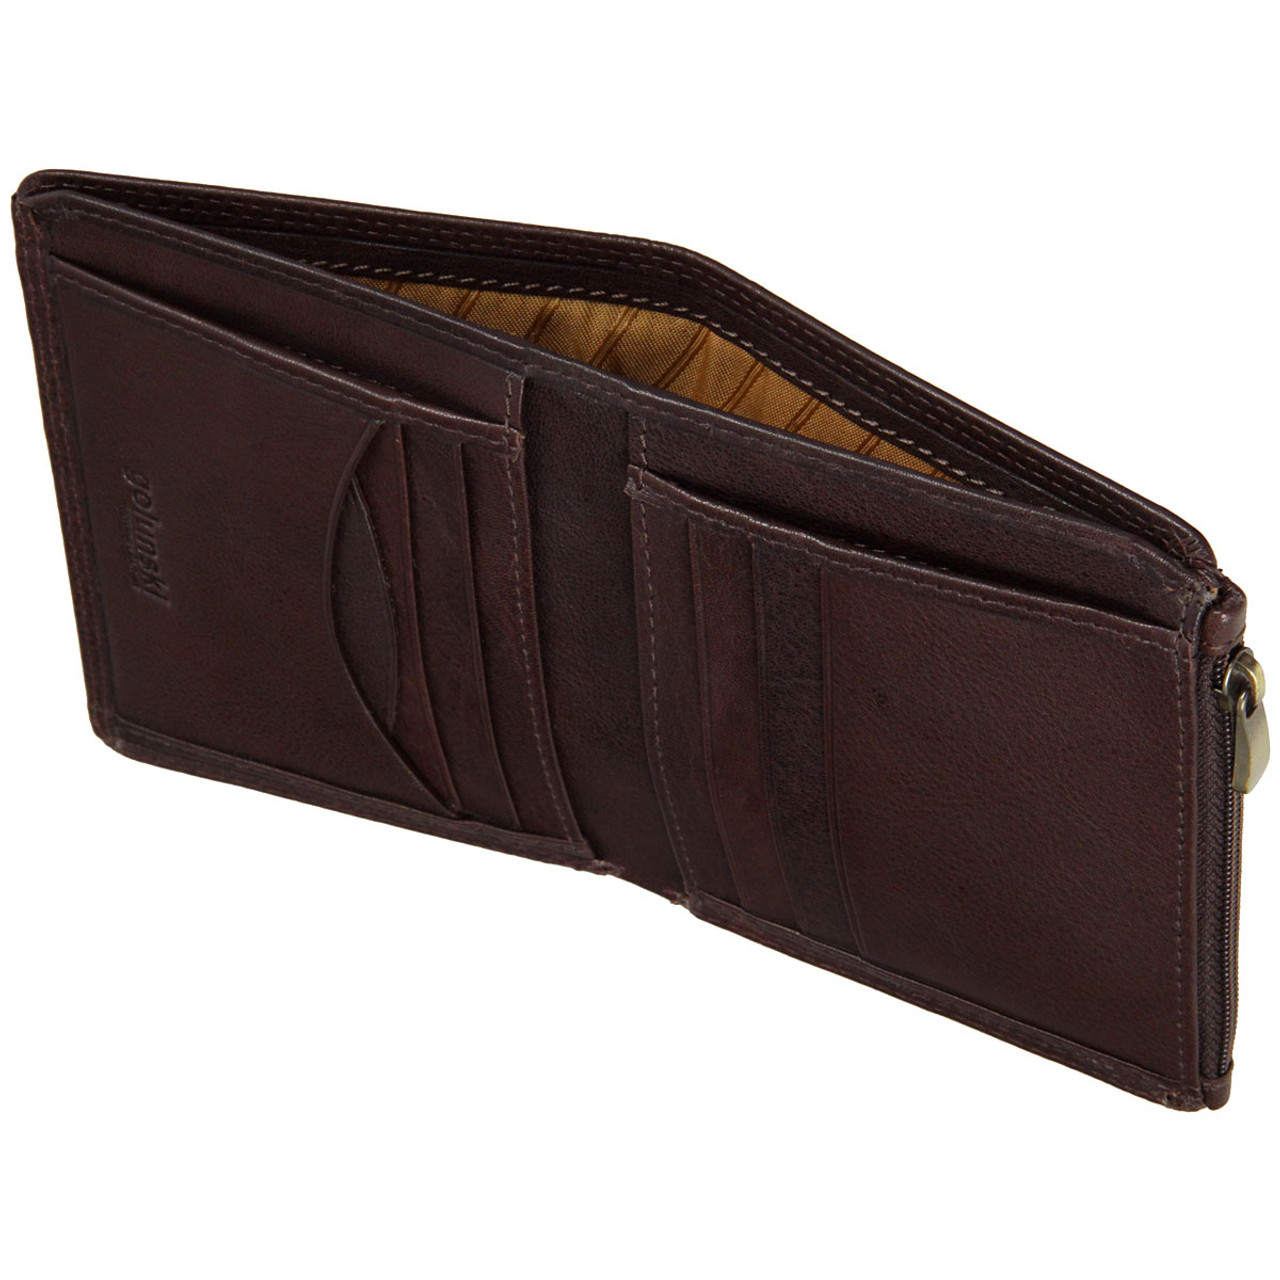 Golunski Ladies Leather Small Wallet Purse - Black Tropical